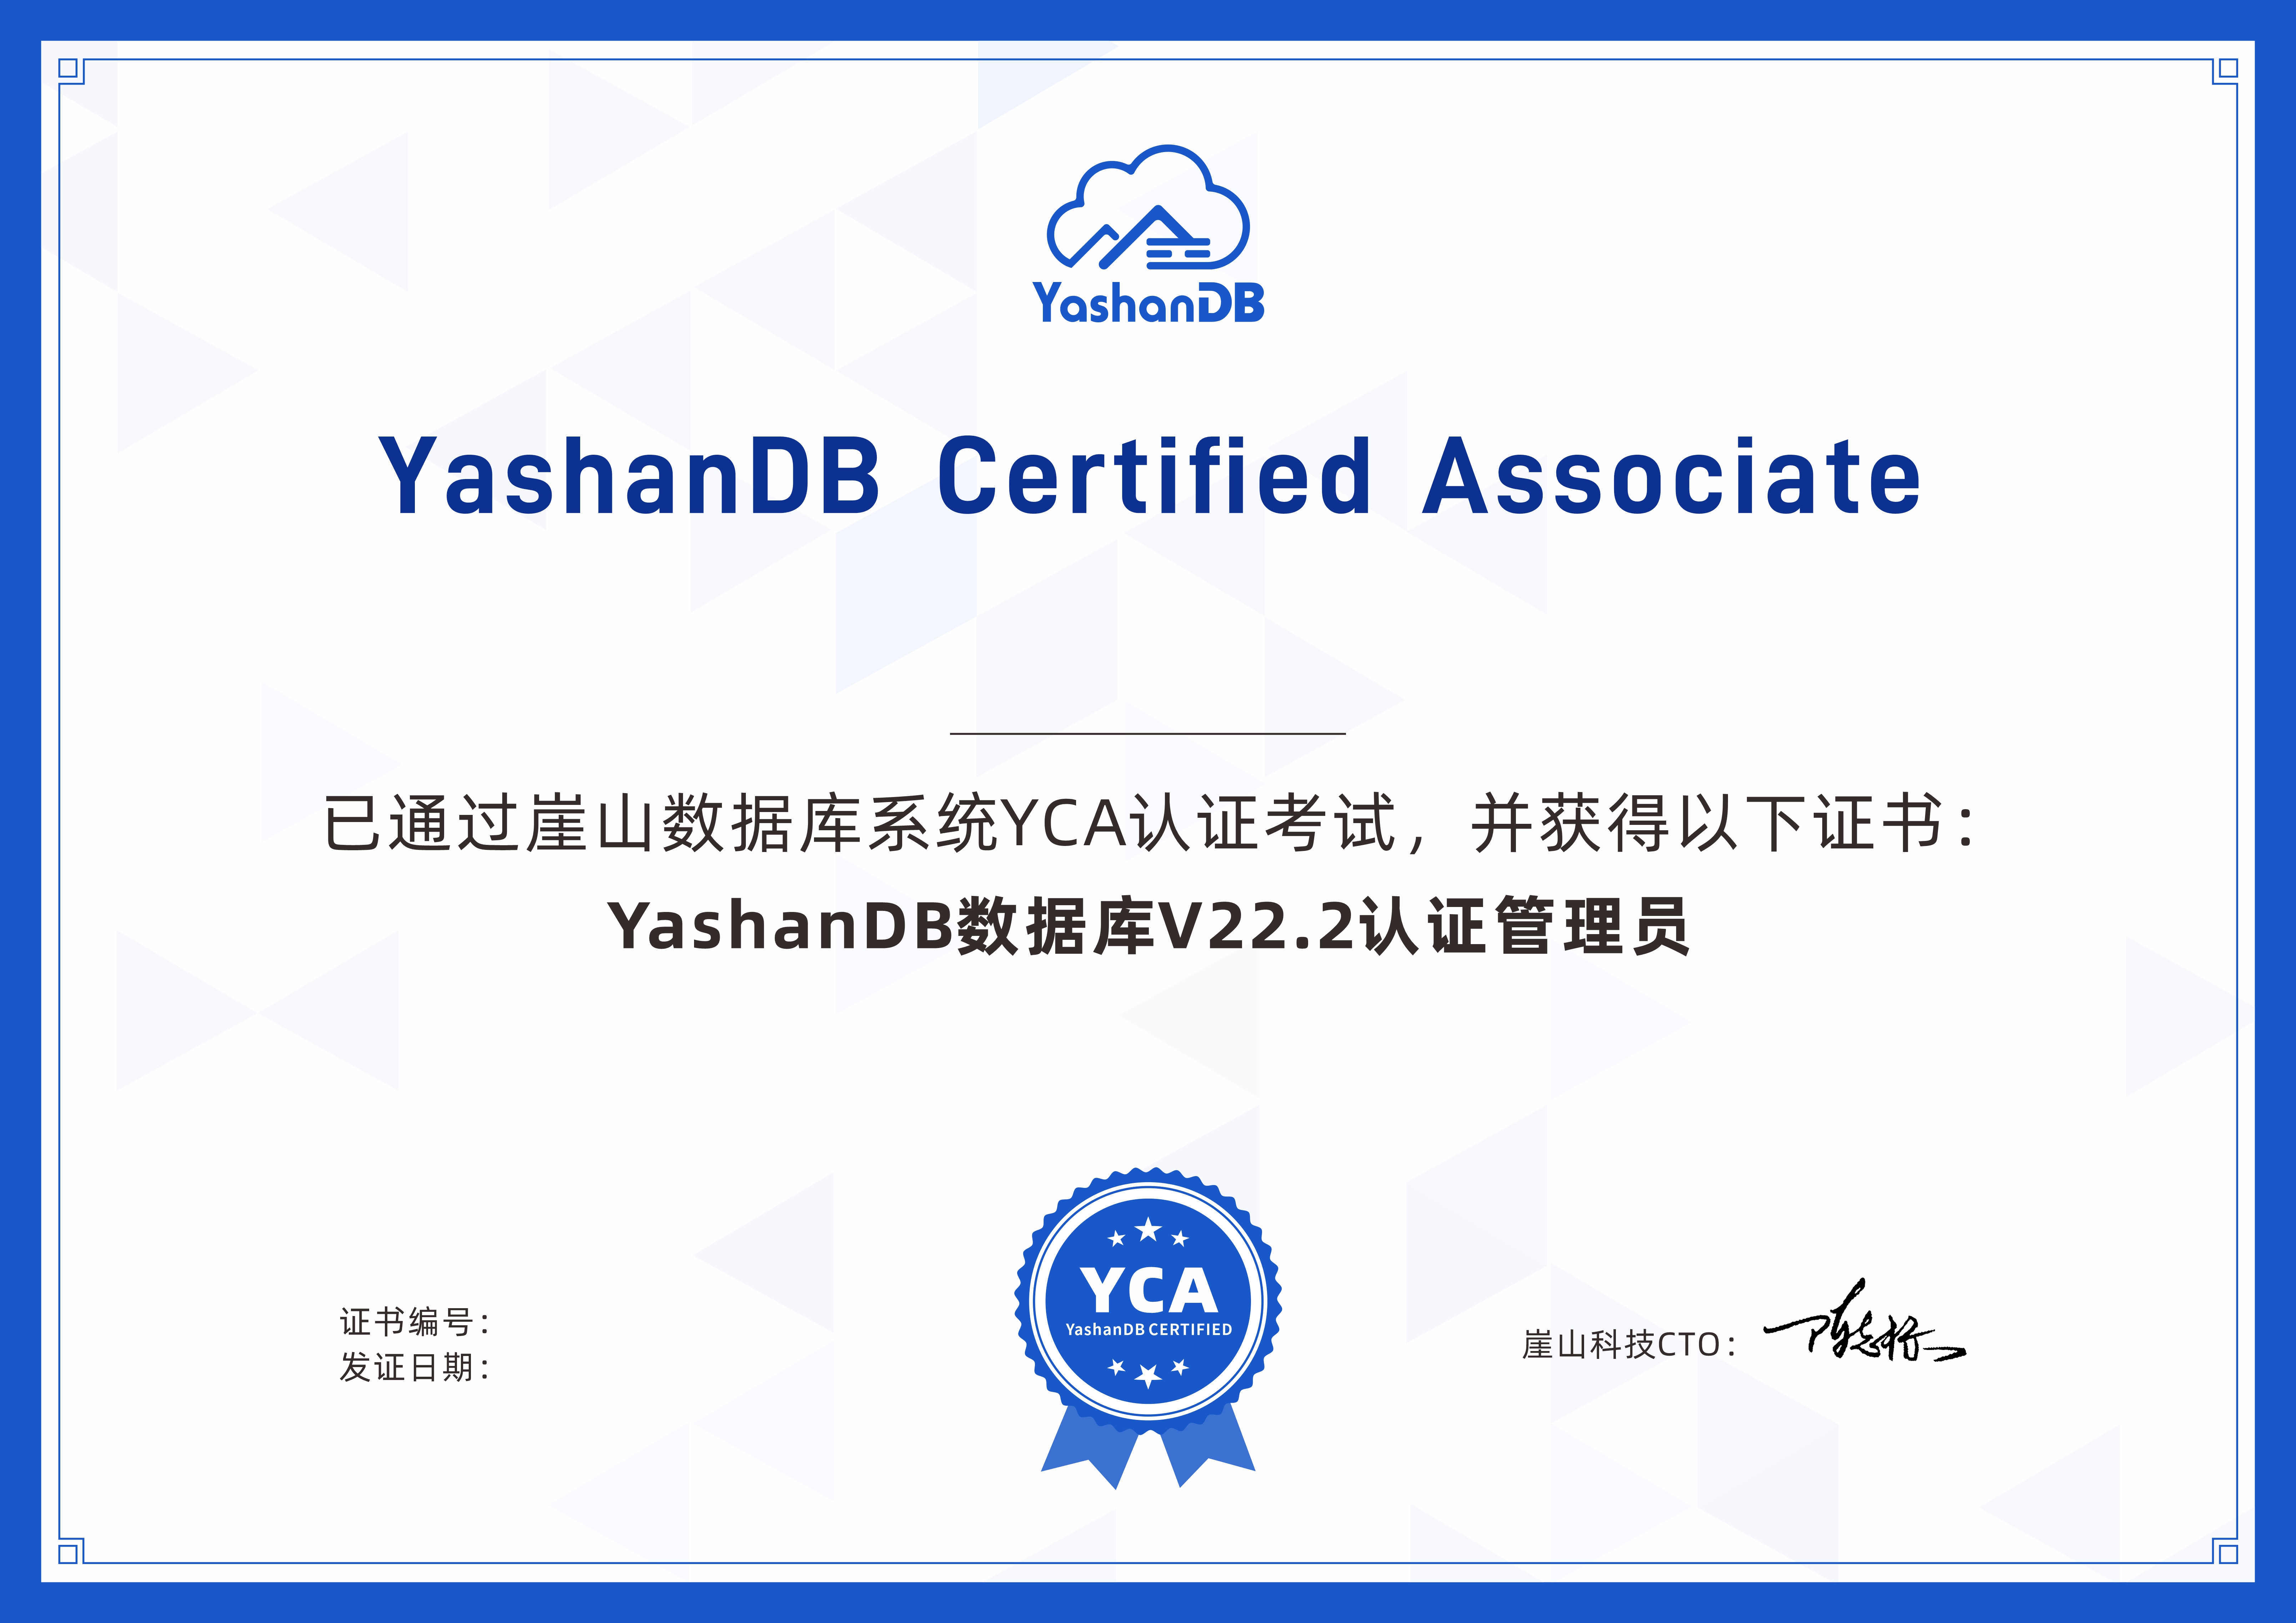 YashanDB YCA证书图